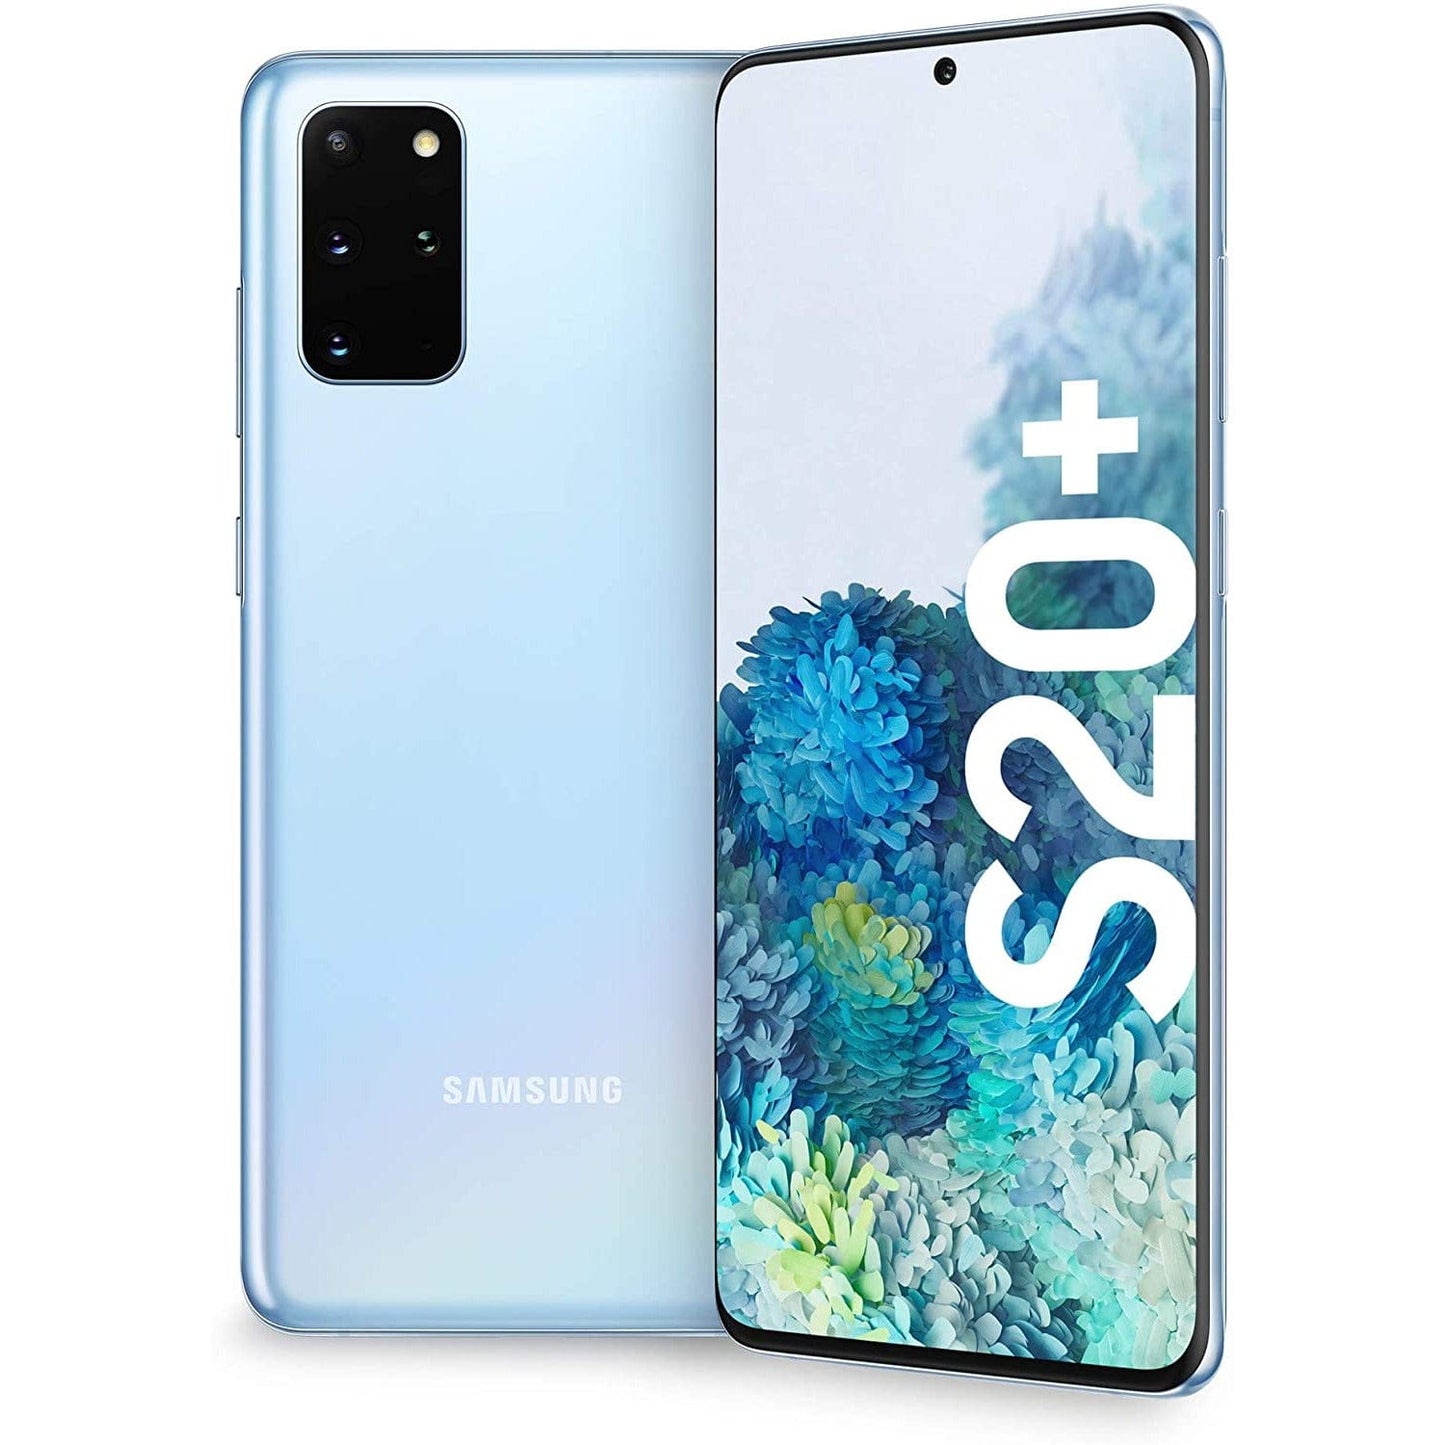 Samsung Galaxy S20+ - 128 GB - Cosmic Black - T-Mobile